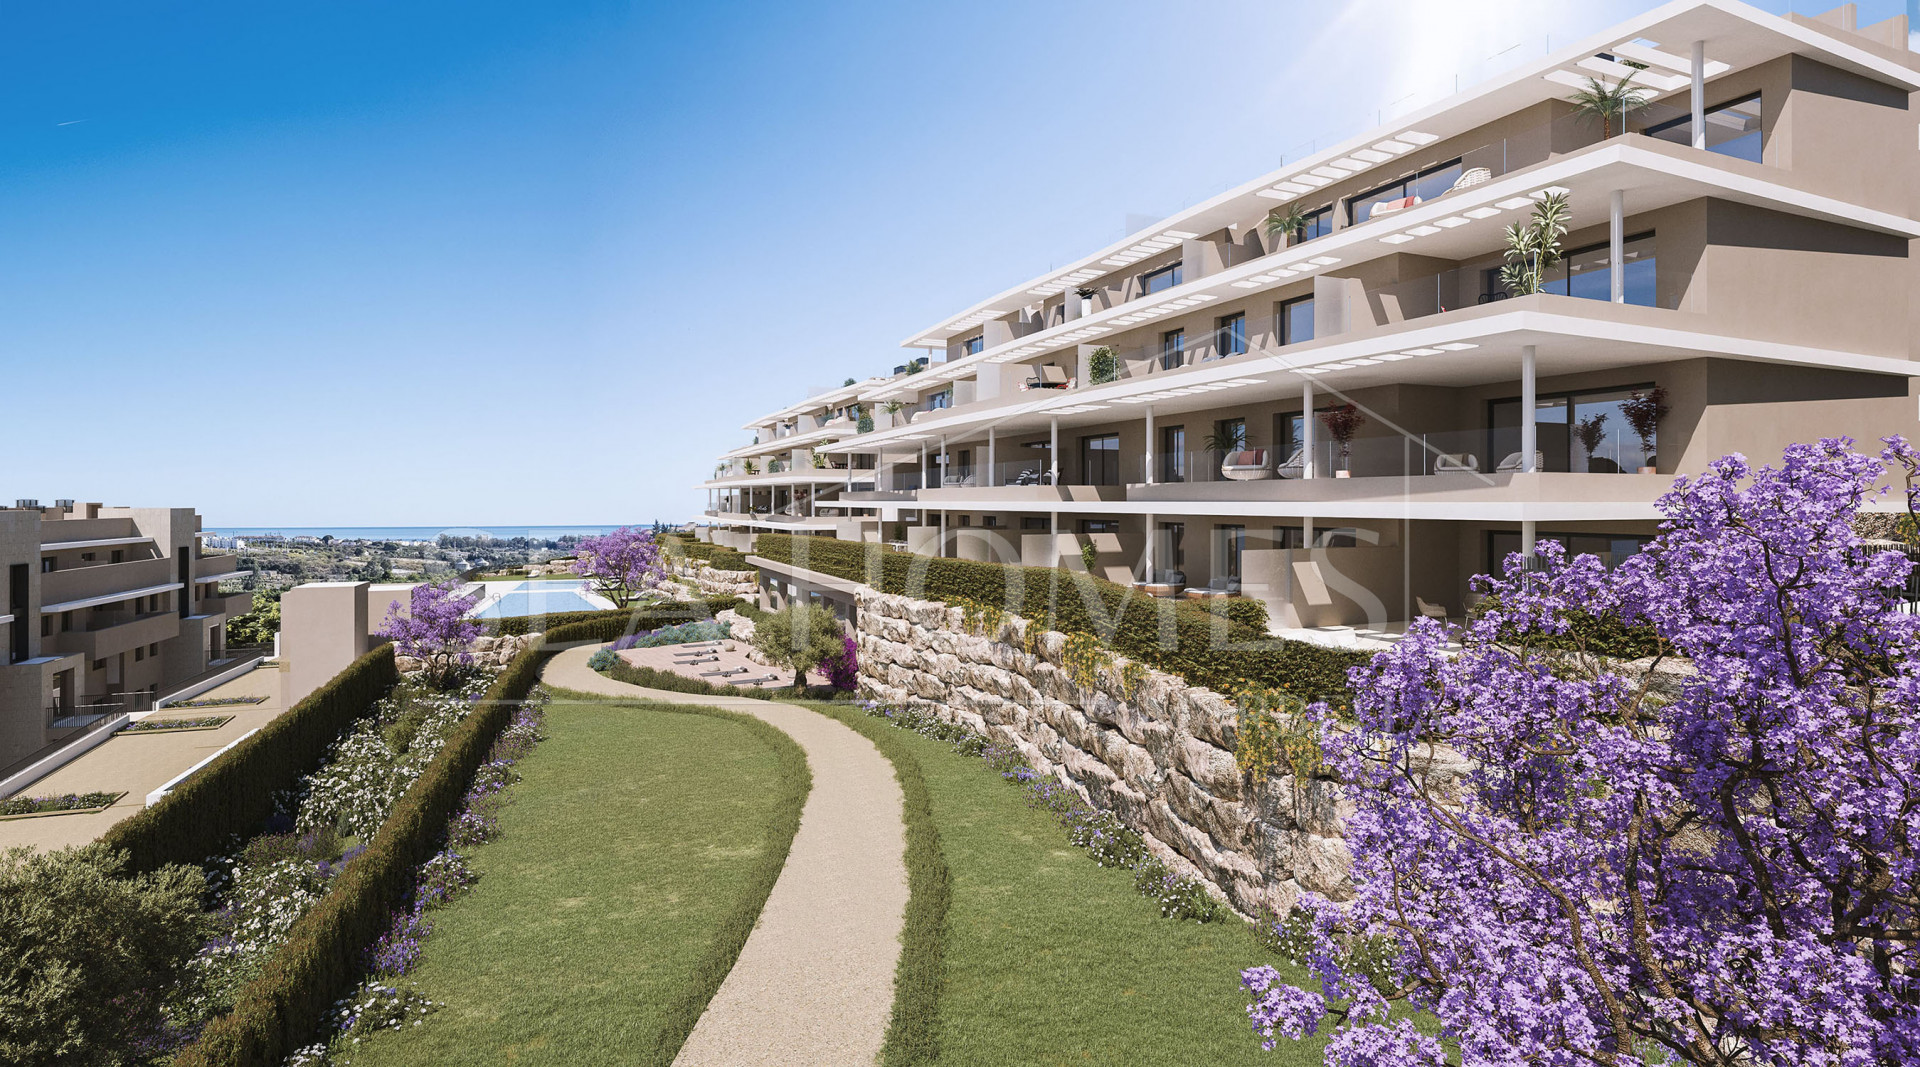 Capri, elegant apartments and penthouses overlooking the Mediterranean sea in Estepona